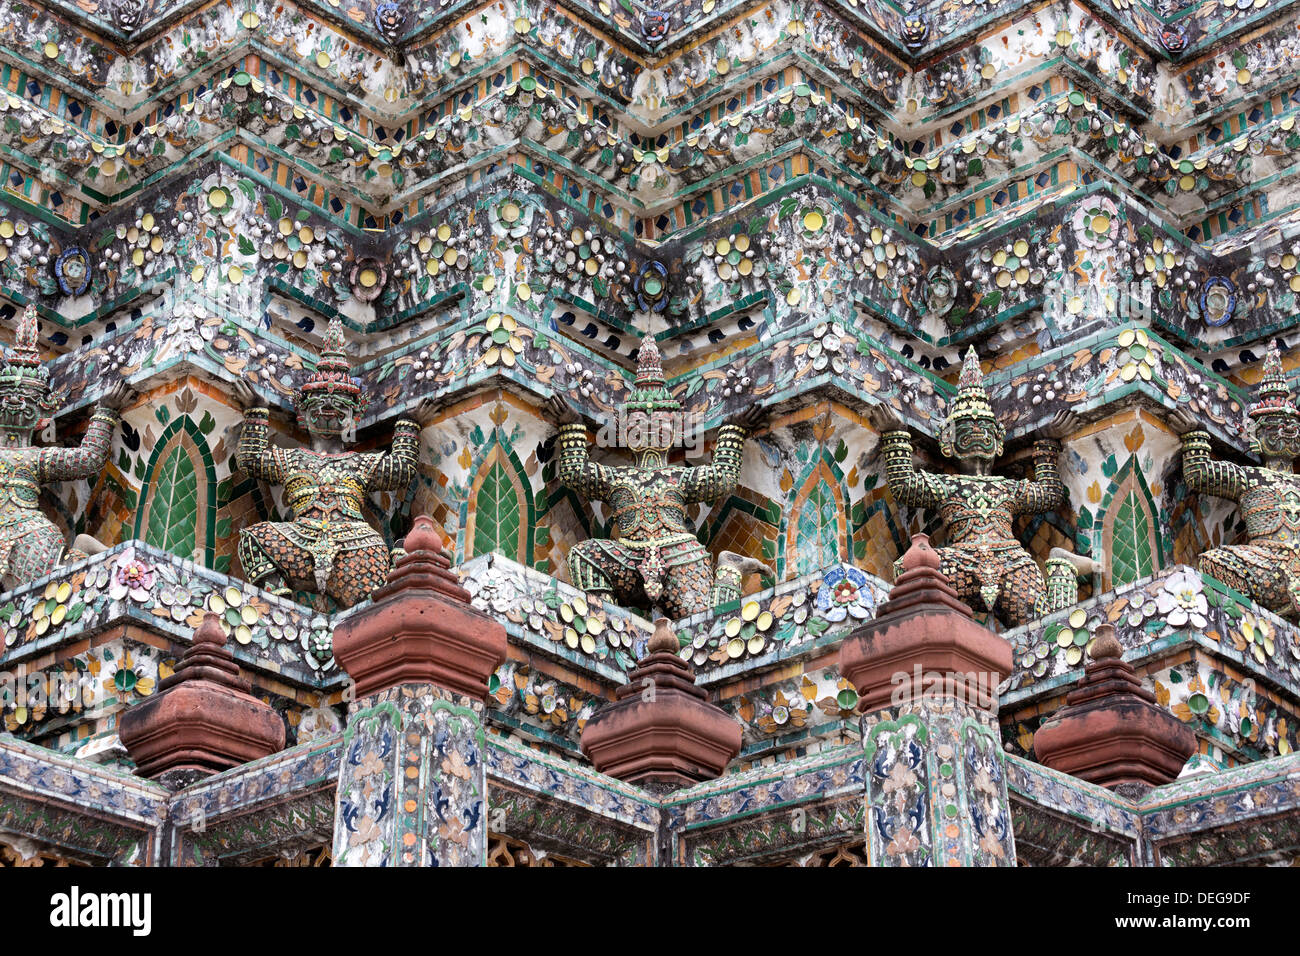 Detail of the Central Prang showing demon figures and ceramic decoration, Wat Arun, Bangkok, Thailand Stock Photo